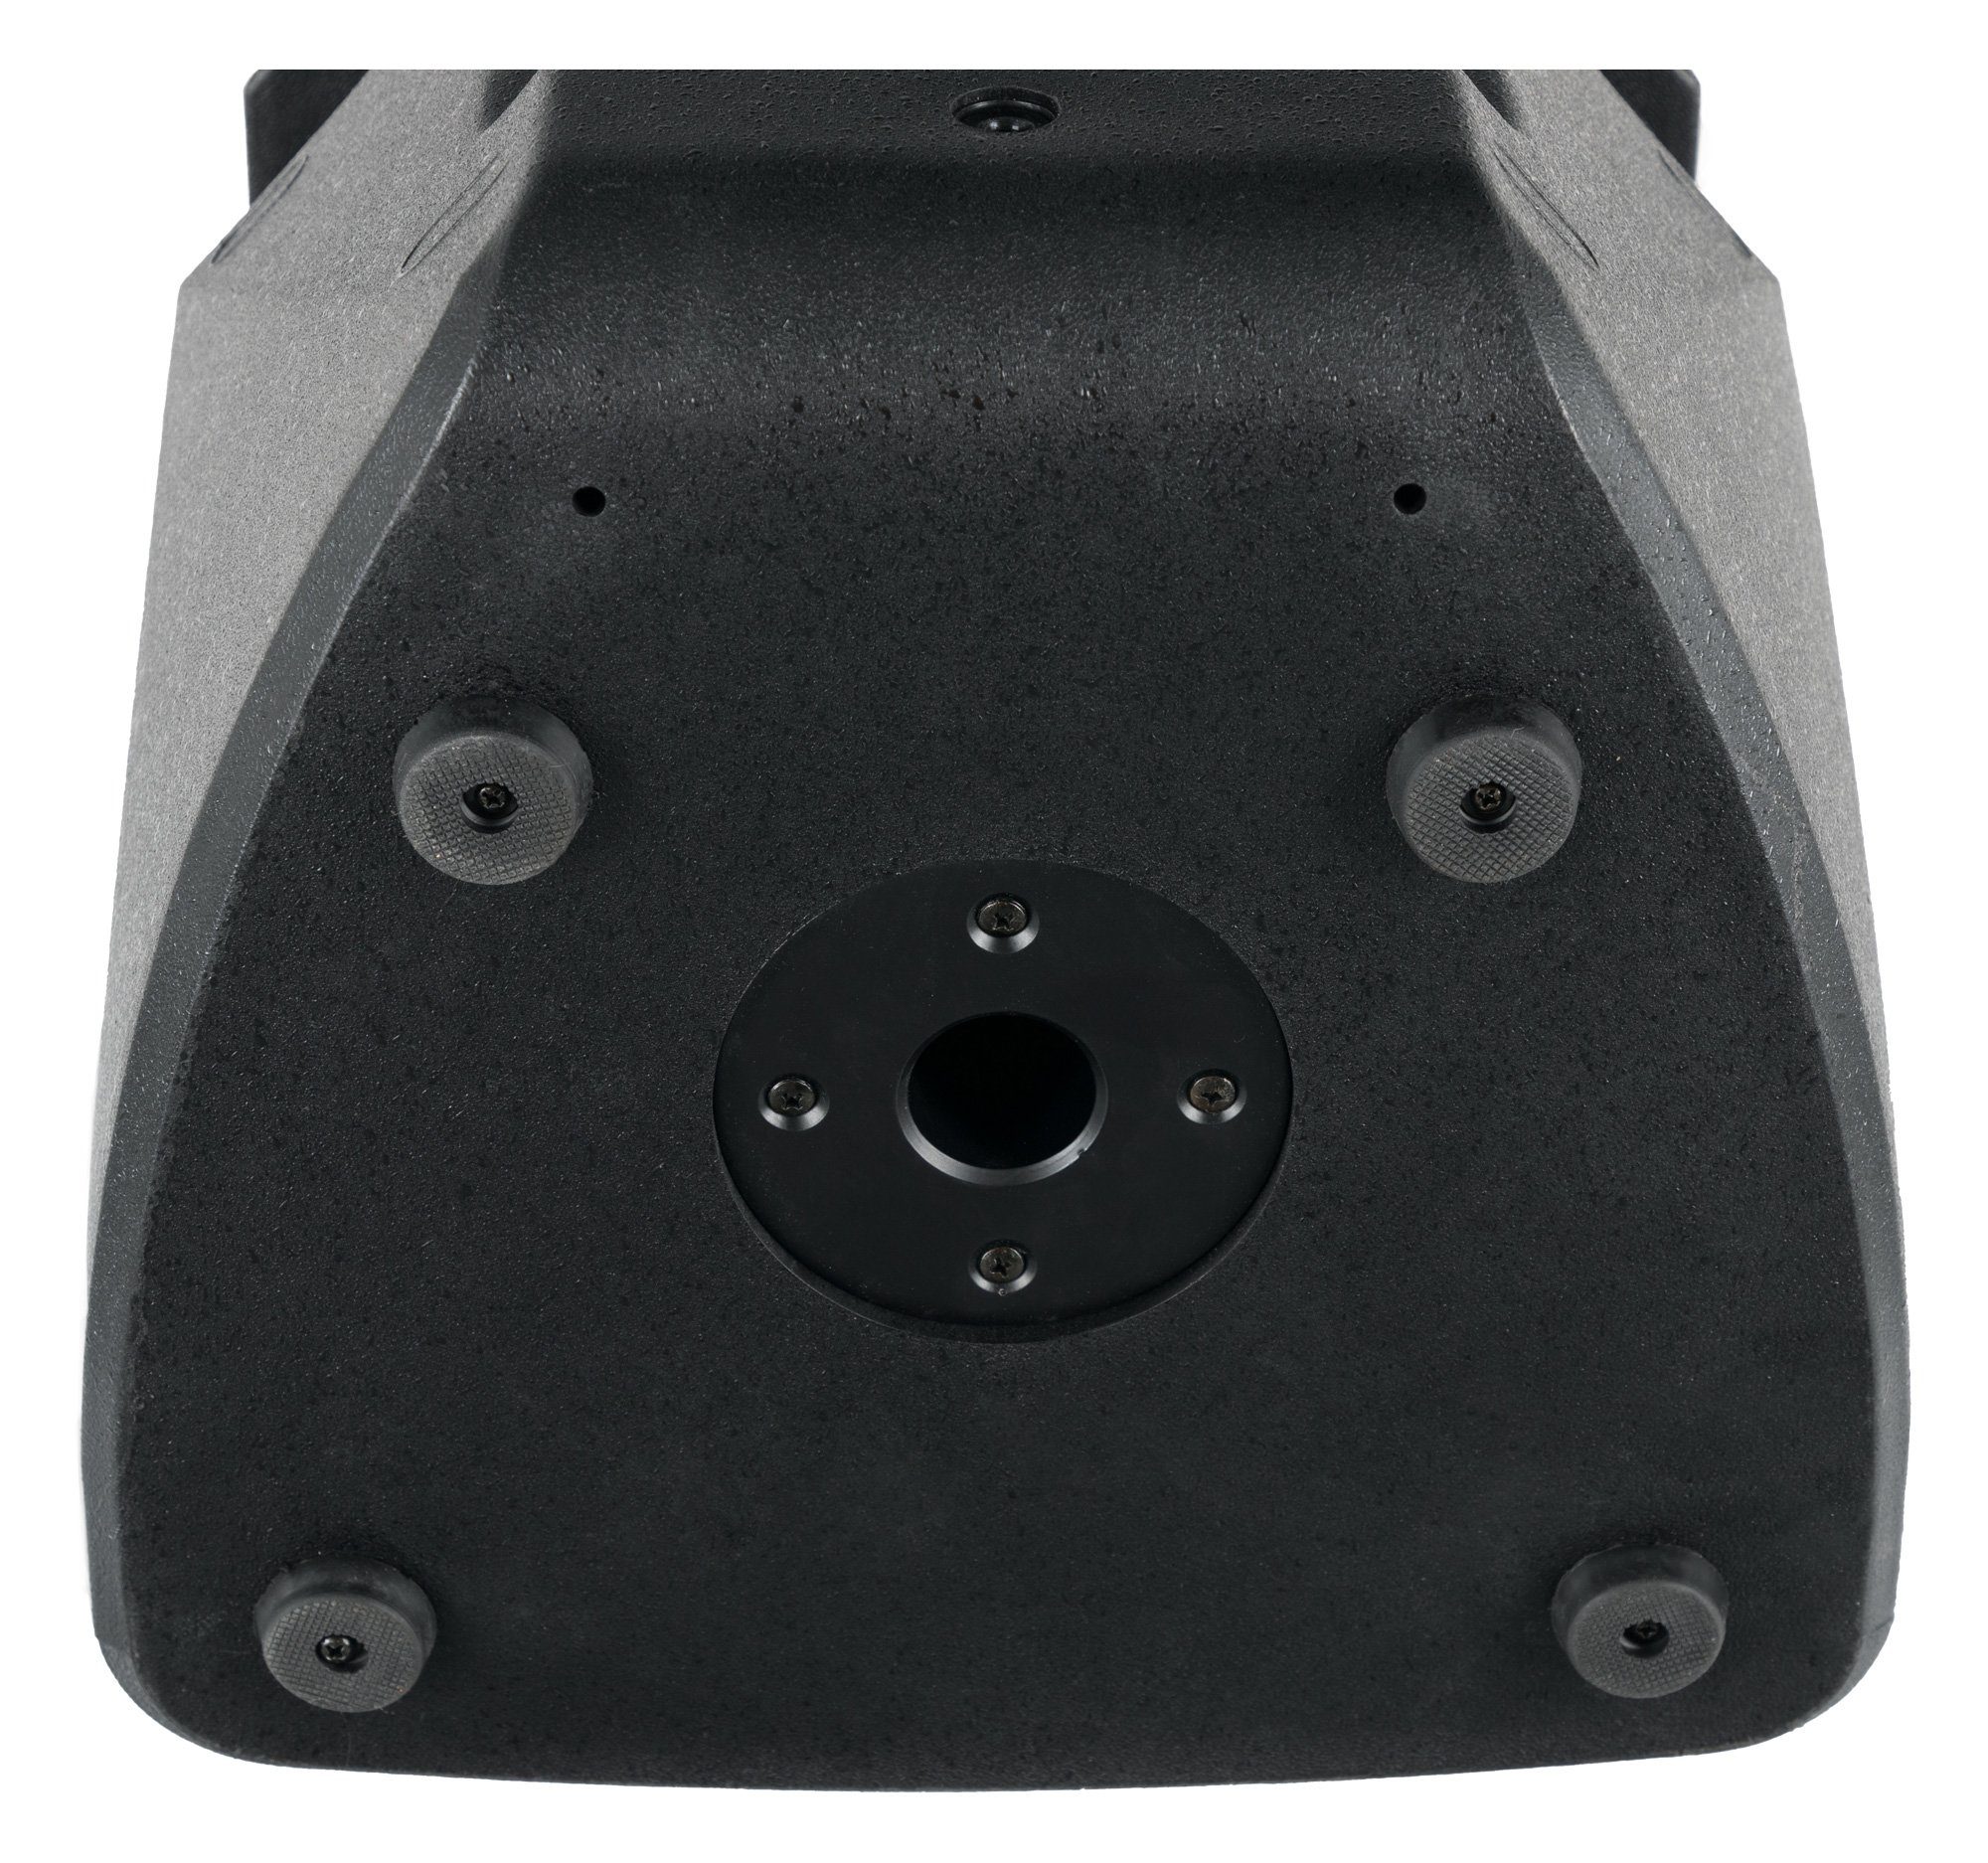 2 - C-208 Pronomic zoll mit Box 8 Aktive Lautsprecher Bi-Amp W, Woofer 2-Wege 200 Kanälen und (Bluetooth, - MA DSP-Presets)